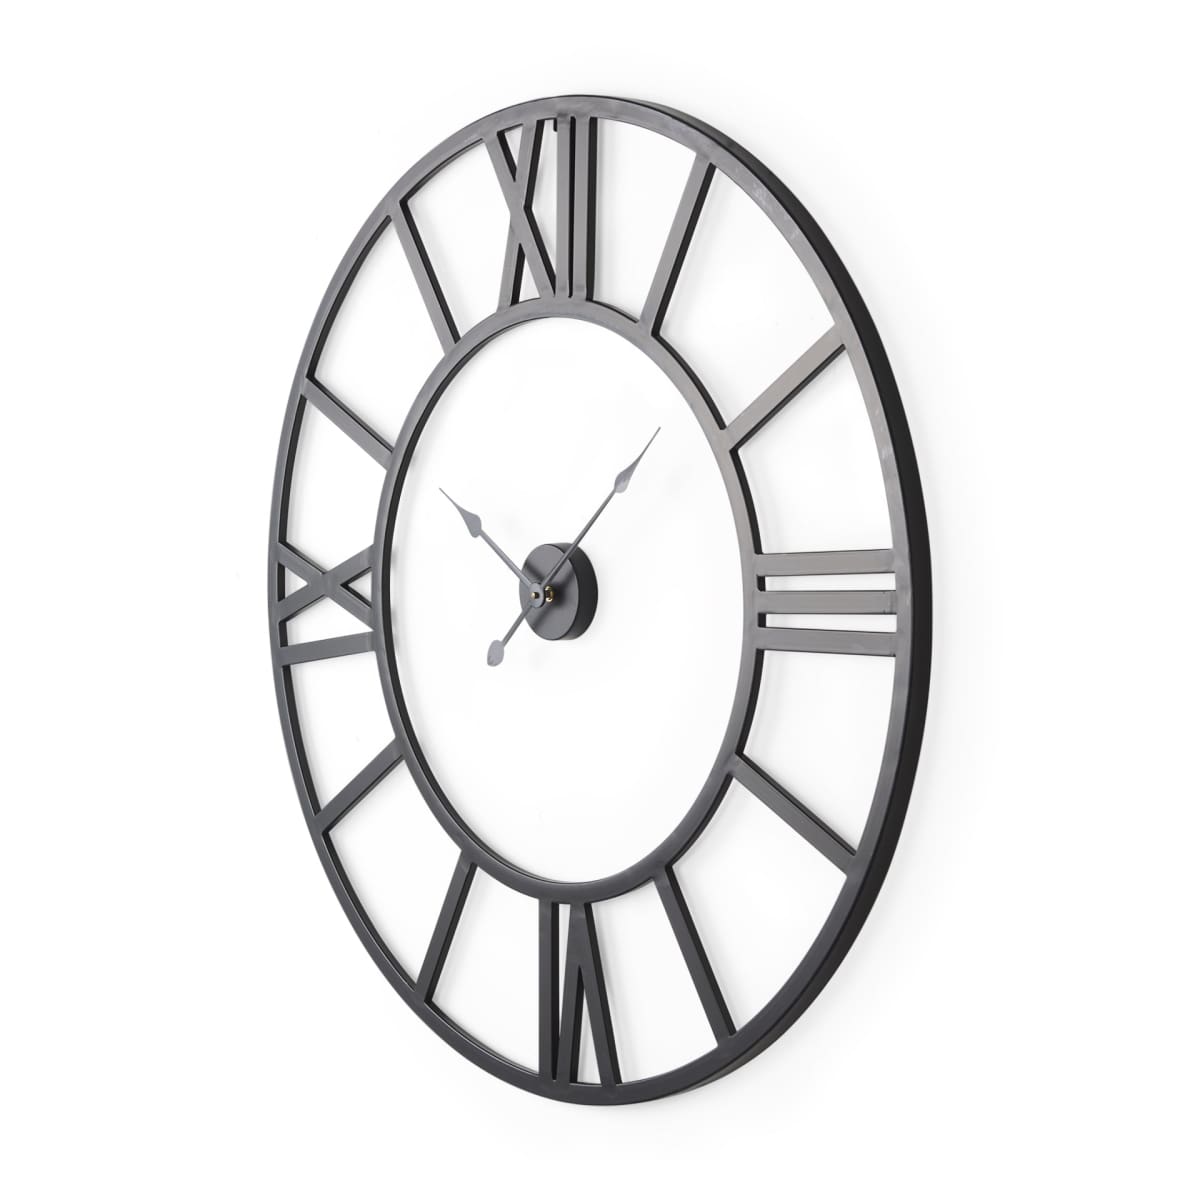 Stoke Wall Clock Black Metal | 42 - wall-clocks